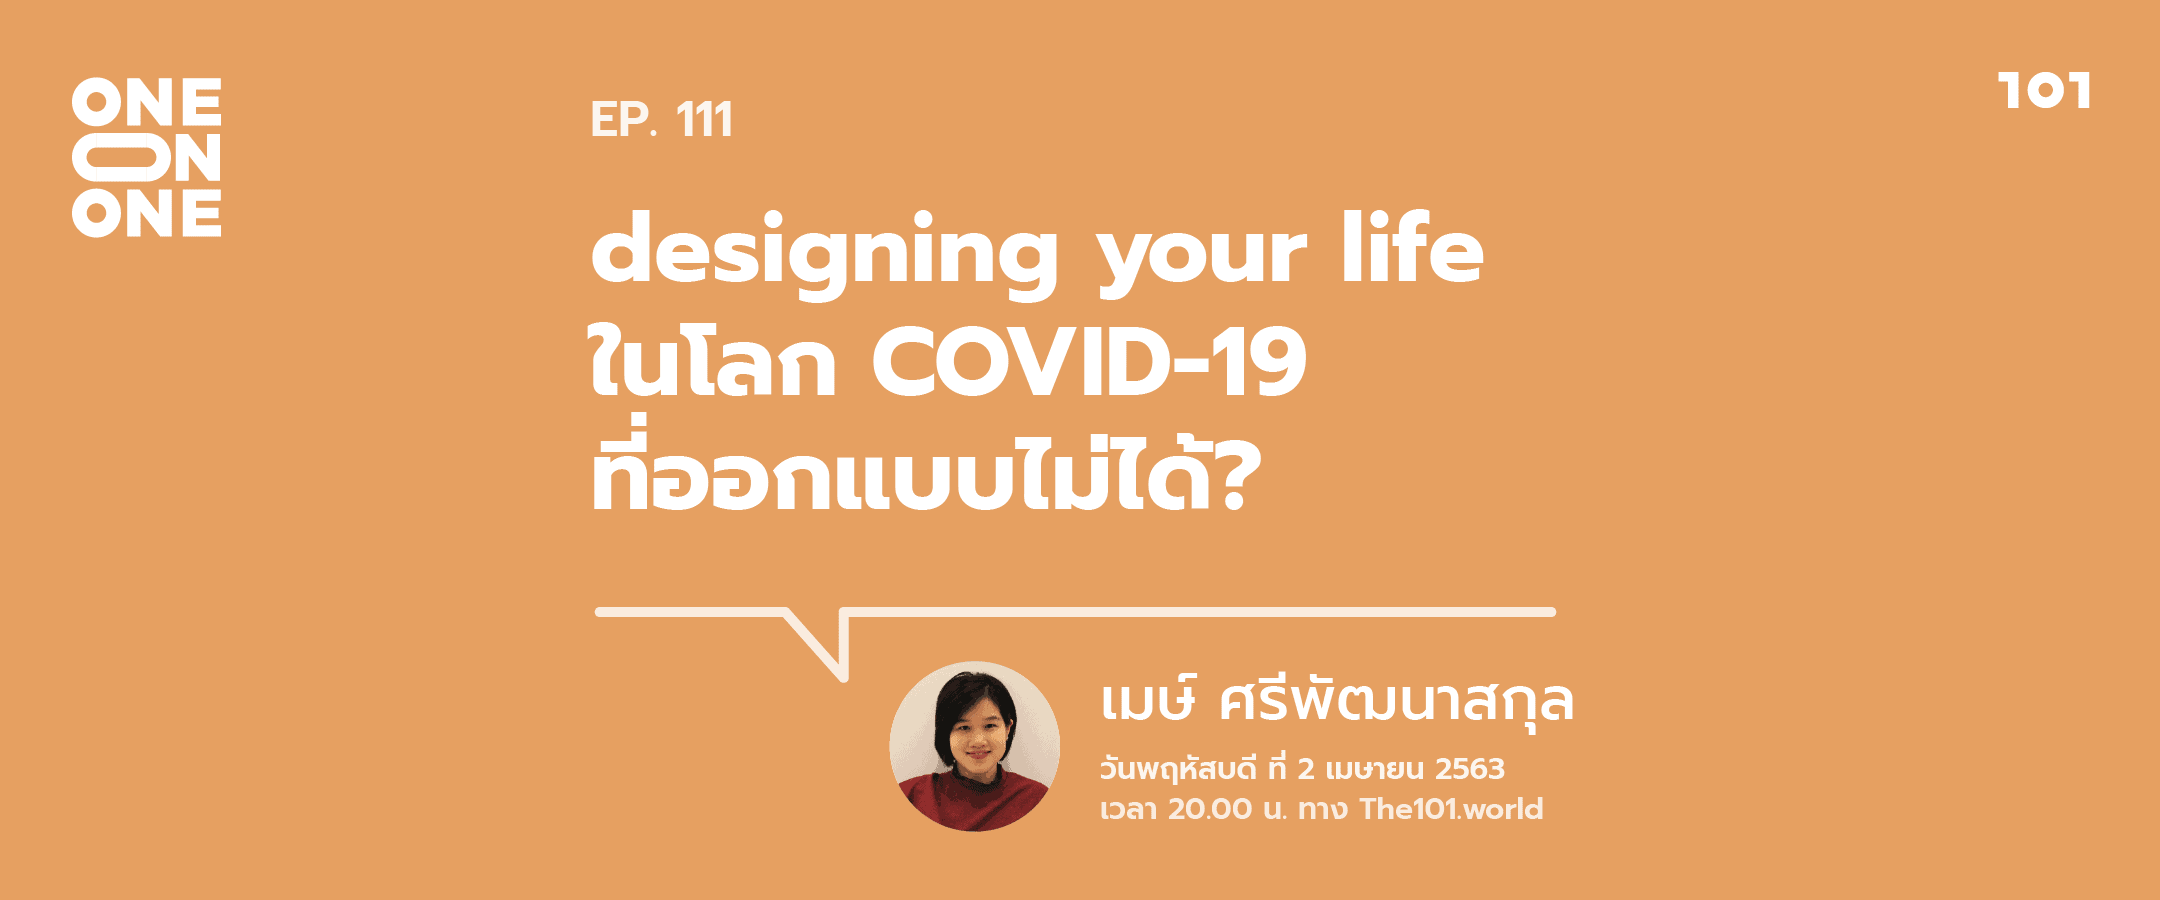 101 One-On-One Ep.111 : “designing your life ในวิกฤต COVID-19 ที่ออกแบบไม่ได้”